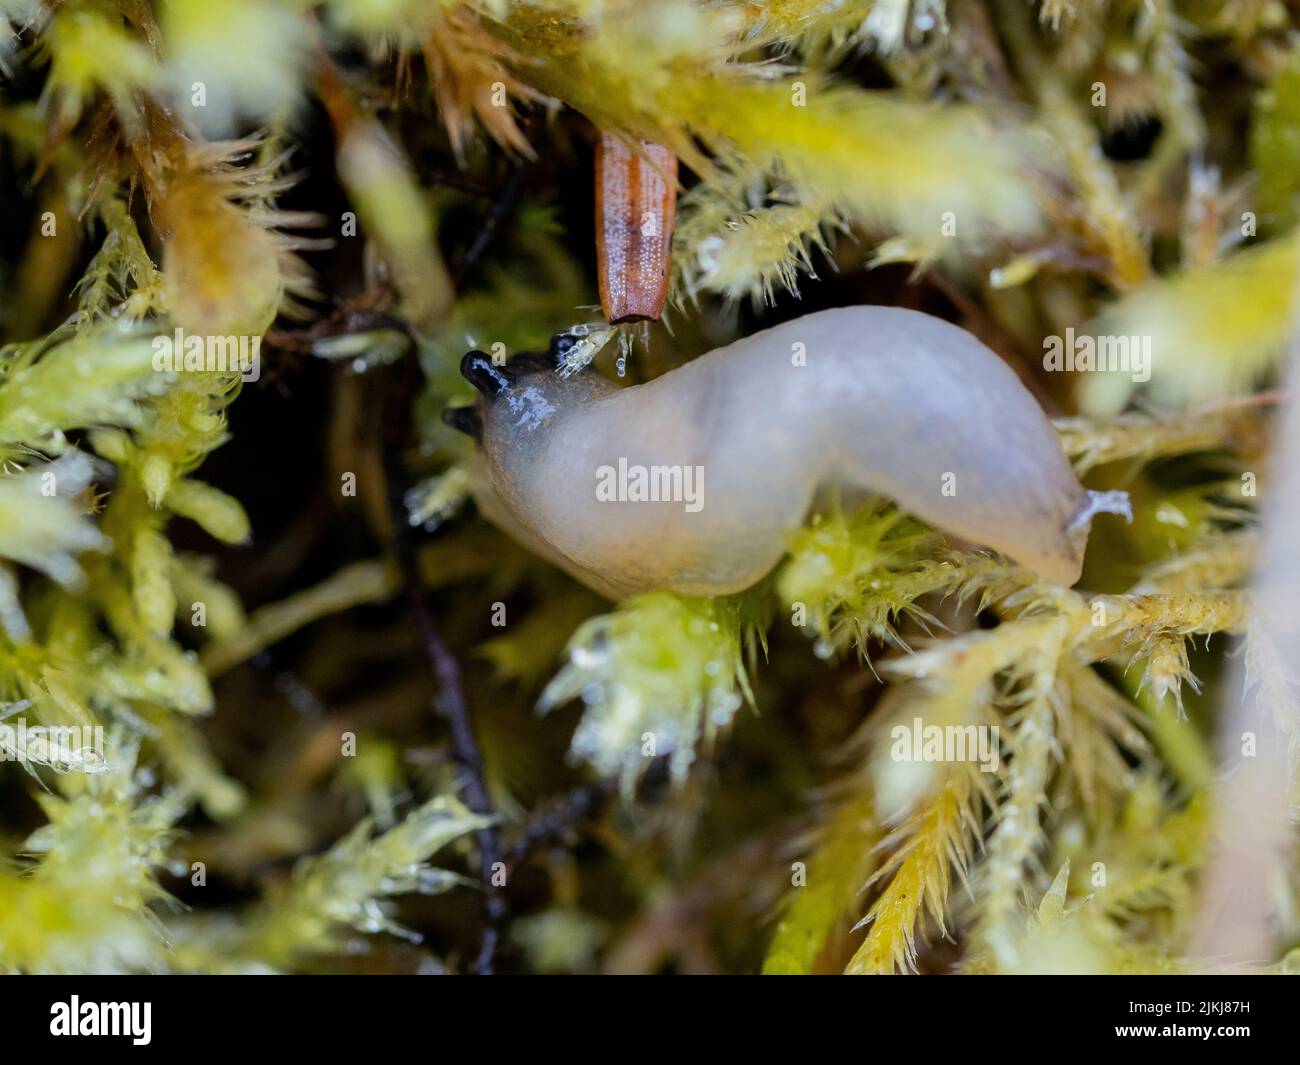 A closeup shot of a slug sitting on a plant Stock Photo